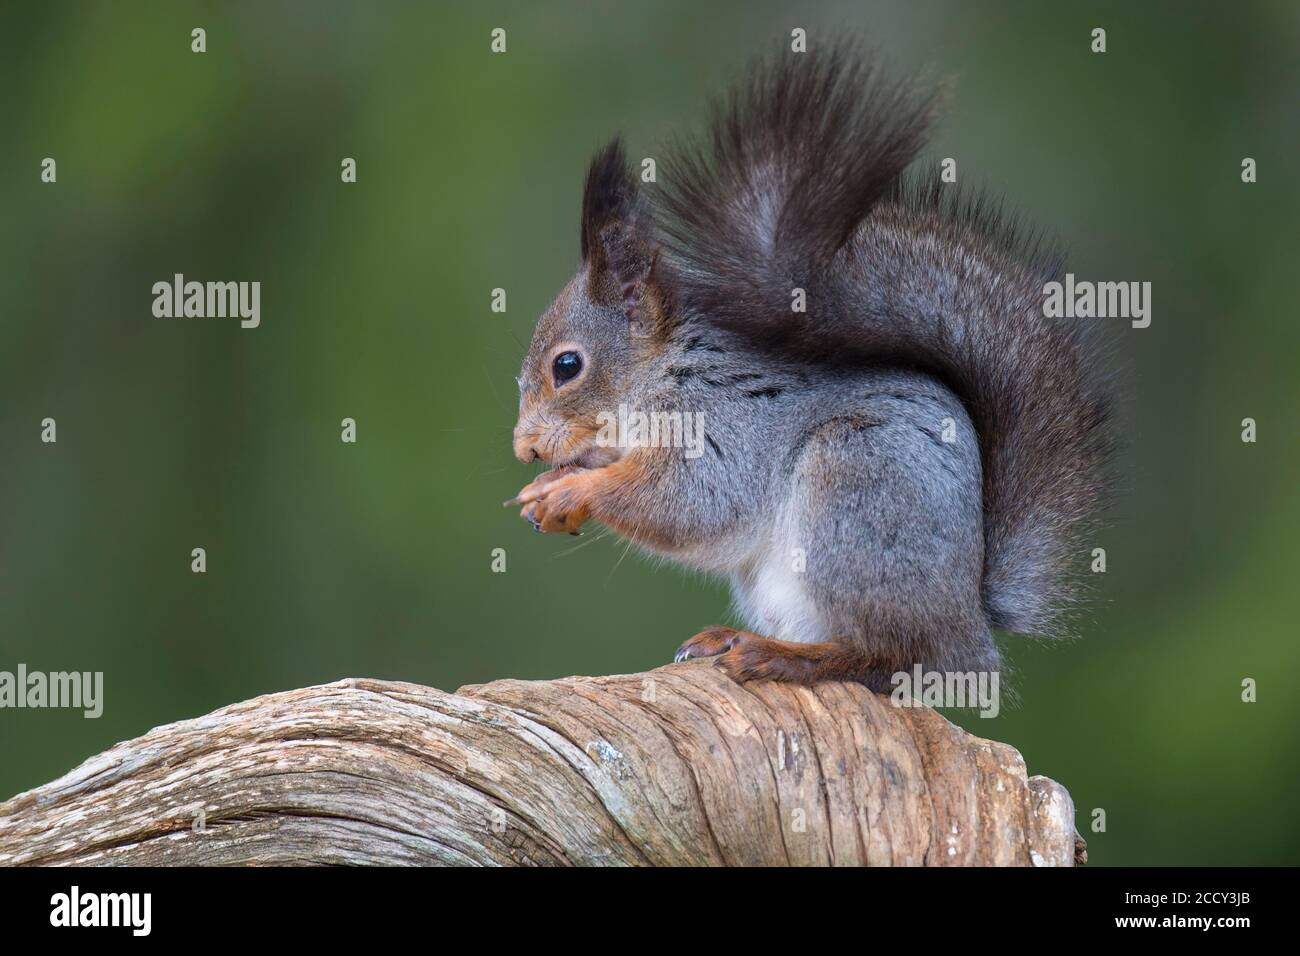 Squirrel (Sciurus) sitting on an old pine tree, eating a nut, Hamra National Park, Jaemtland, Sweden Stock Photo